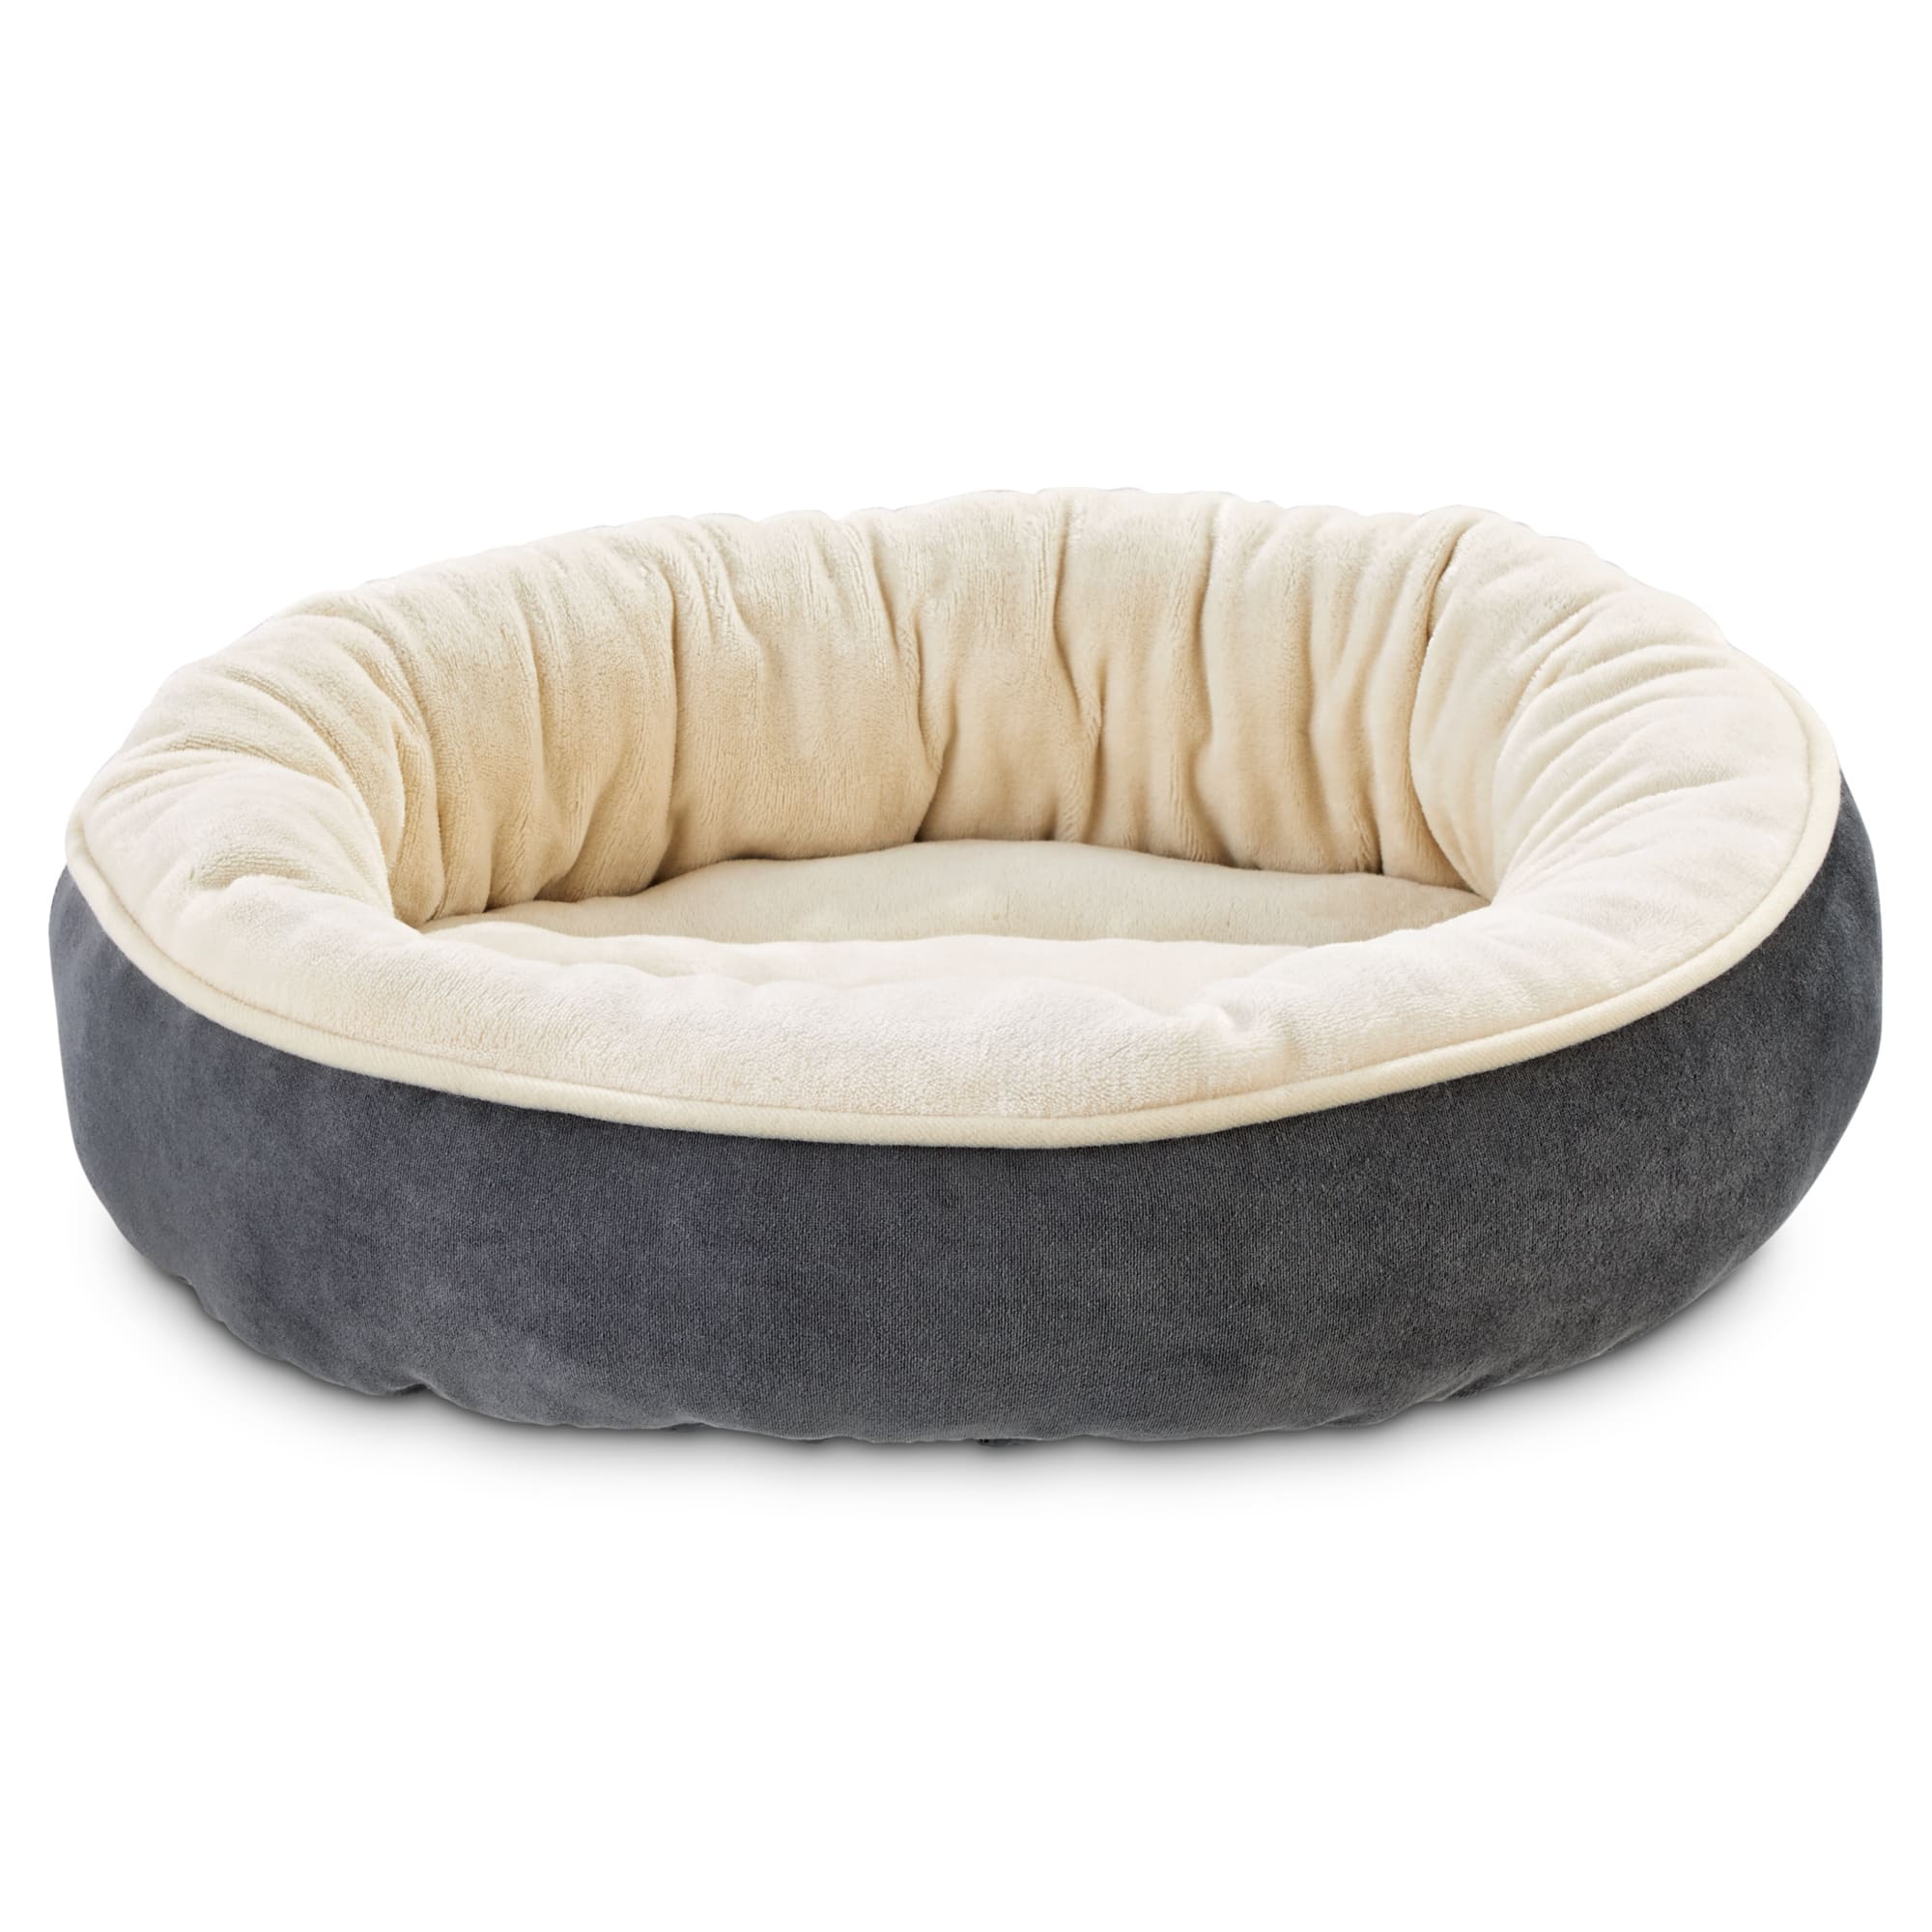 Animaze Gray Circle Bolster Dog Bed, 20 